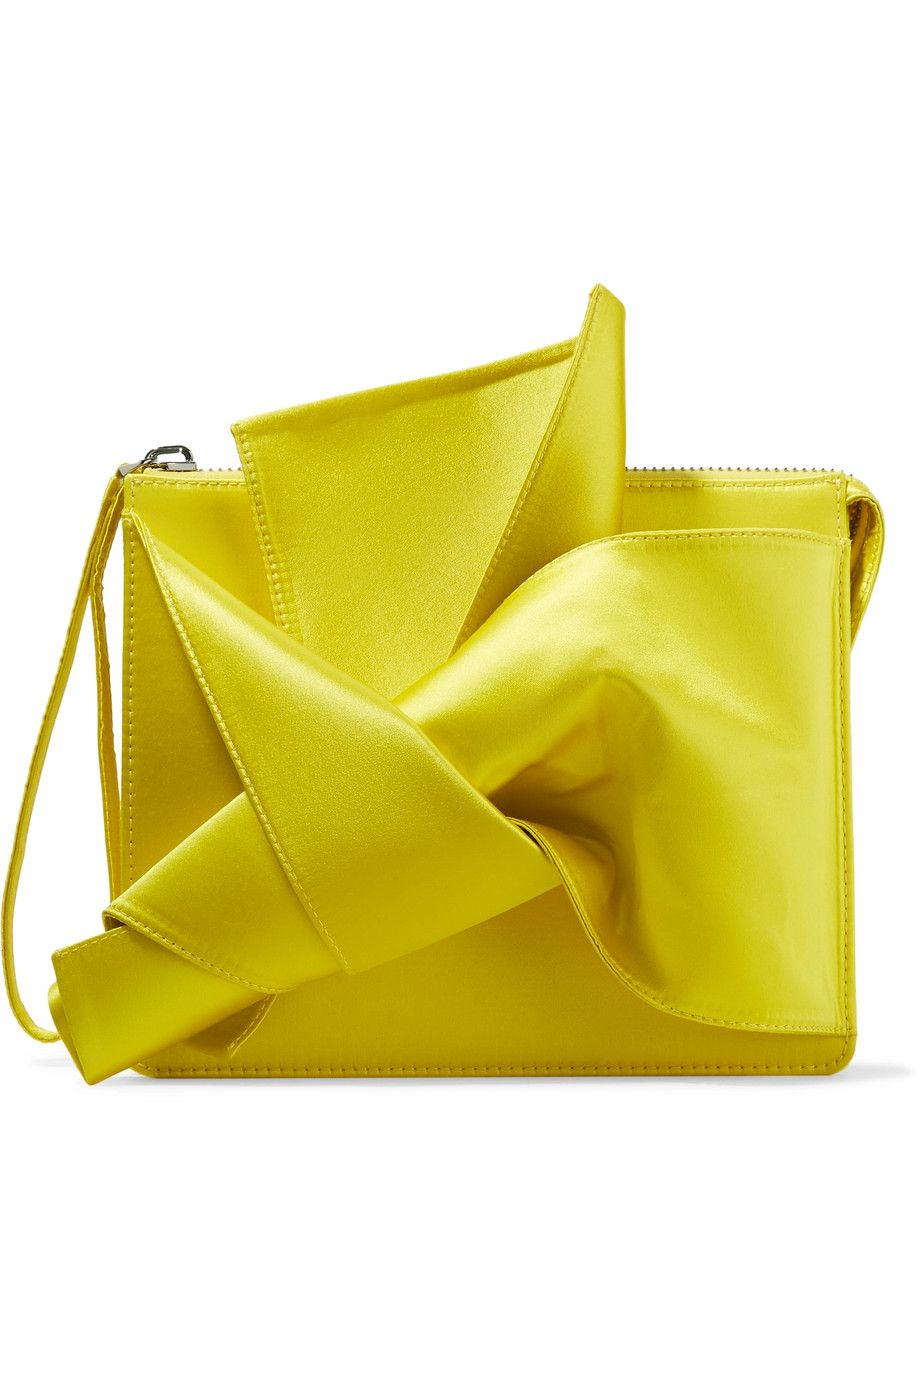 Bag, Yellow, Handbag, Product, Shoulder bag, Fashion accessory, Leather, Textile, 